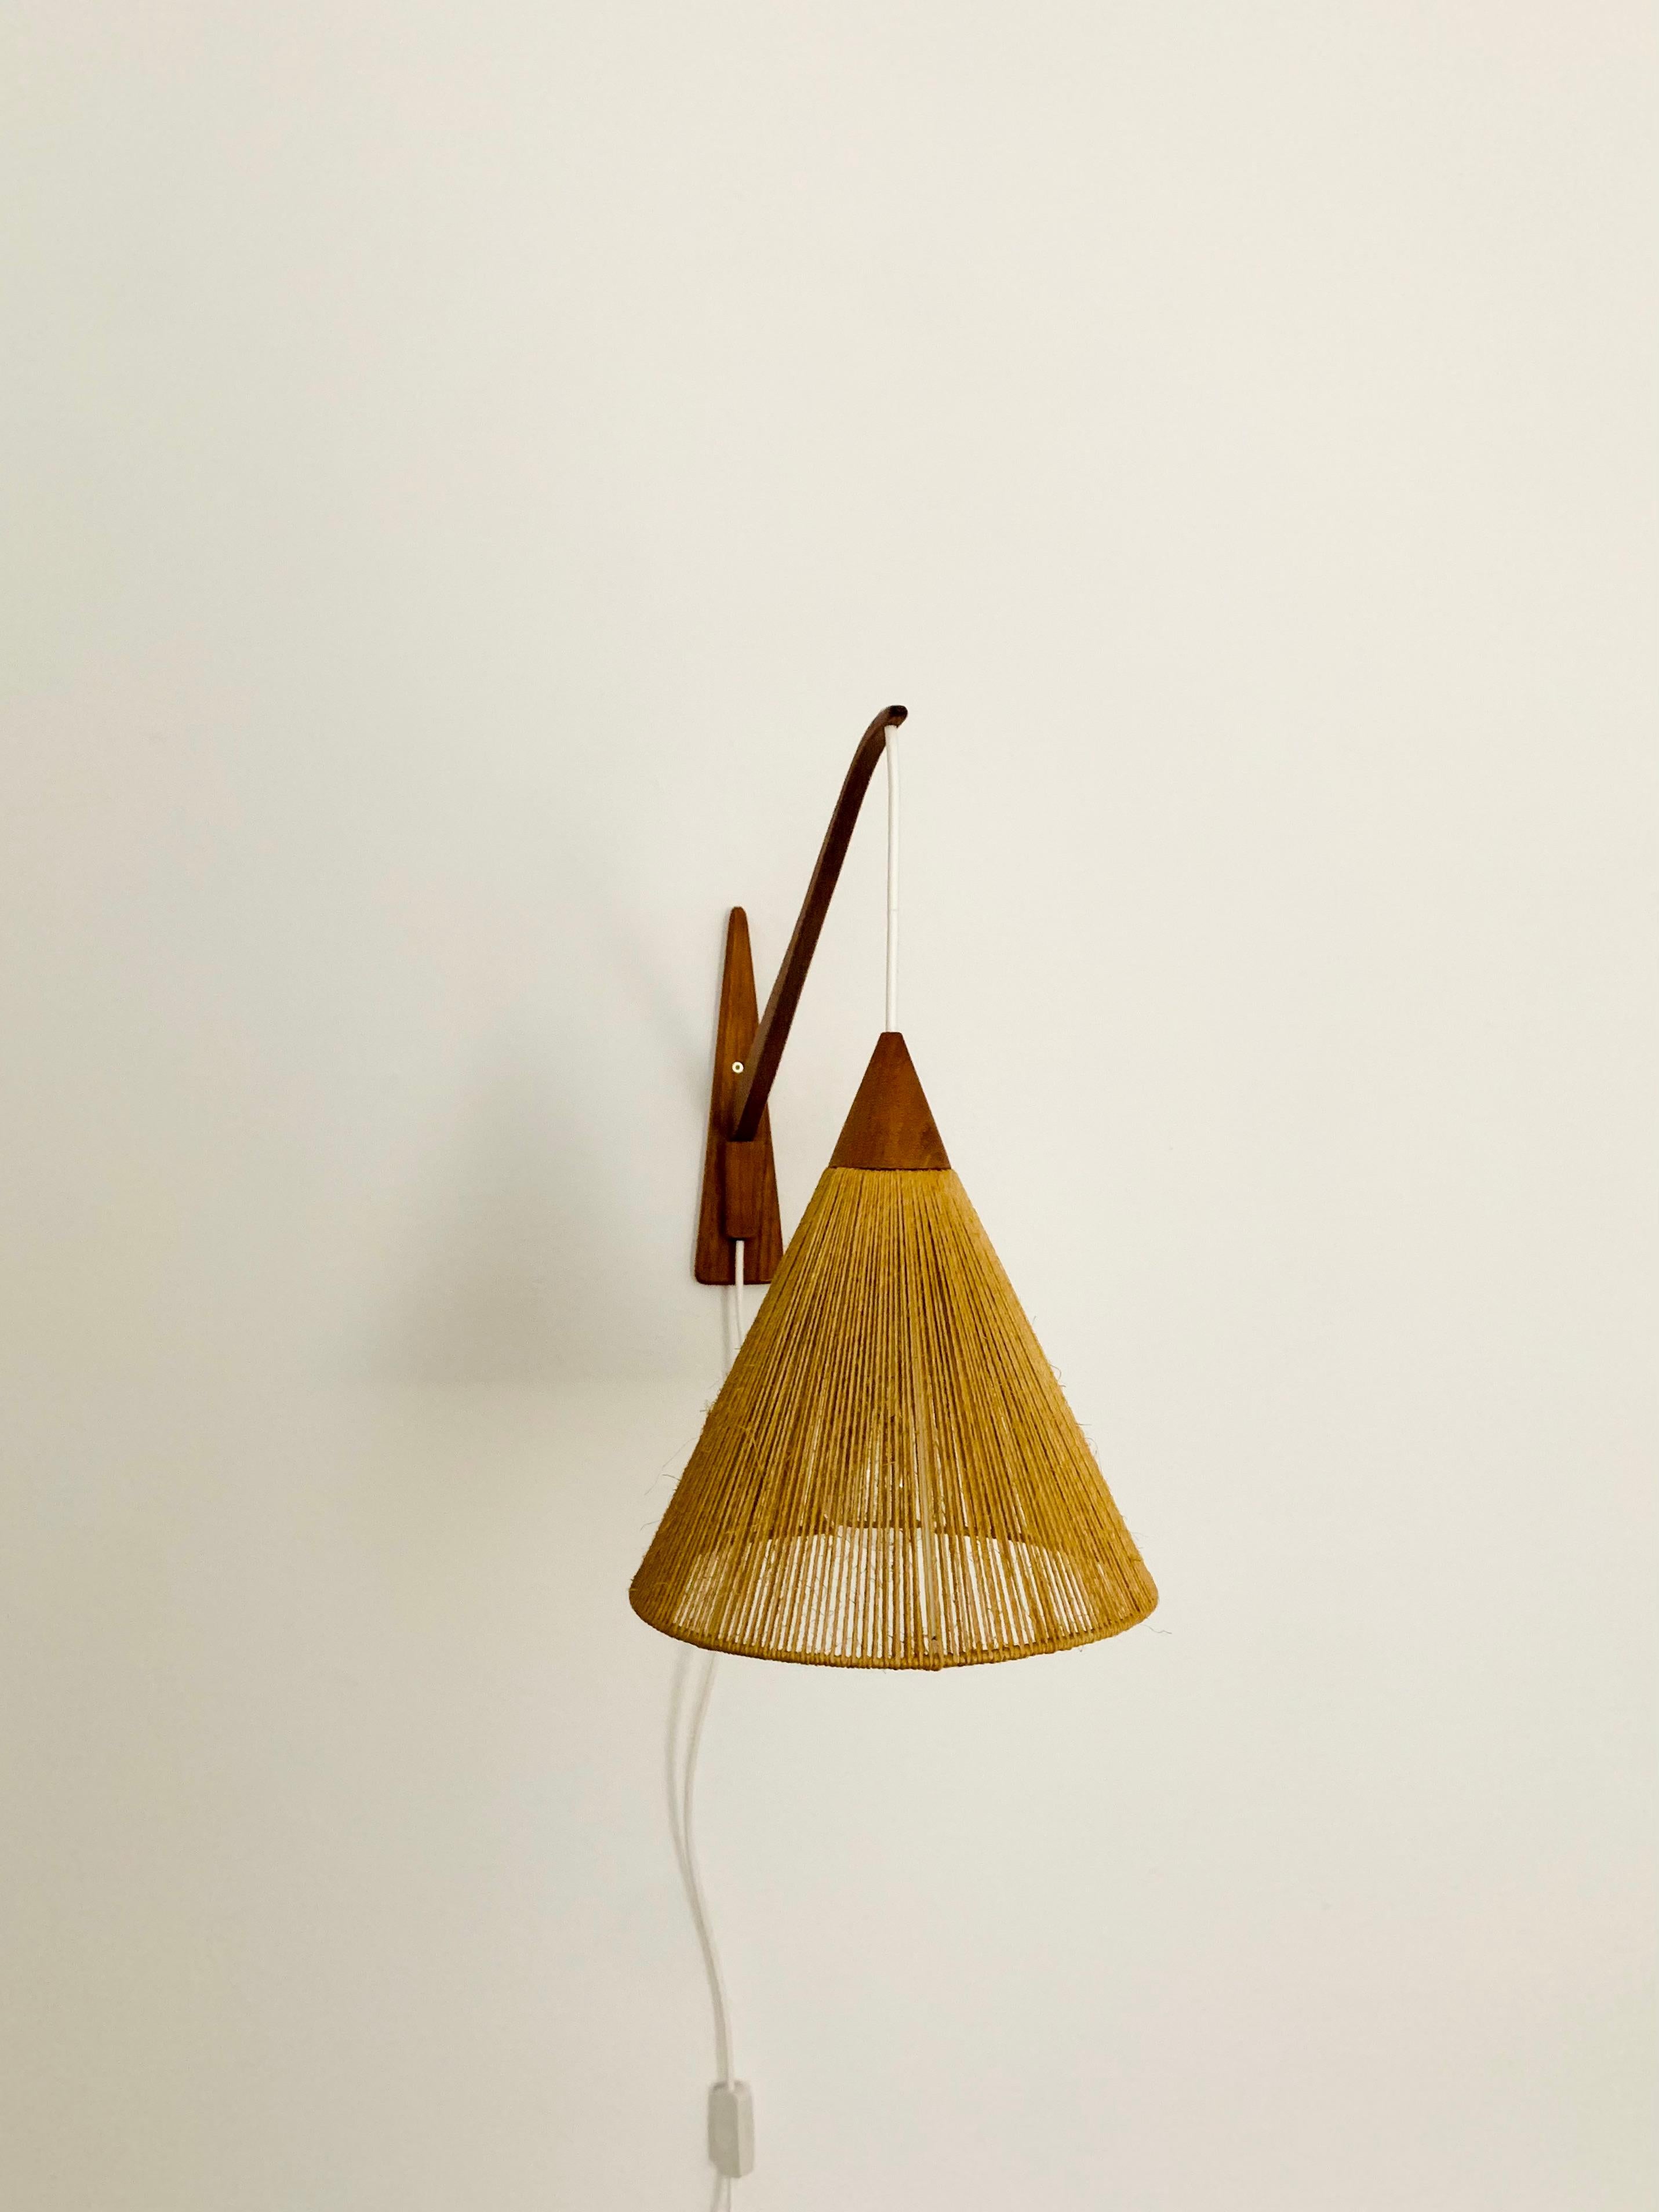 Adjustable Teak Wall Lamp by Temde In Good Condition For Sale In München, DE